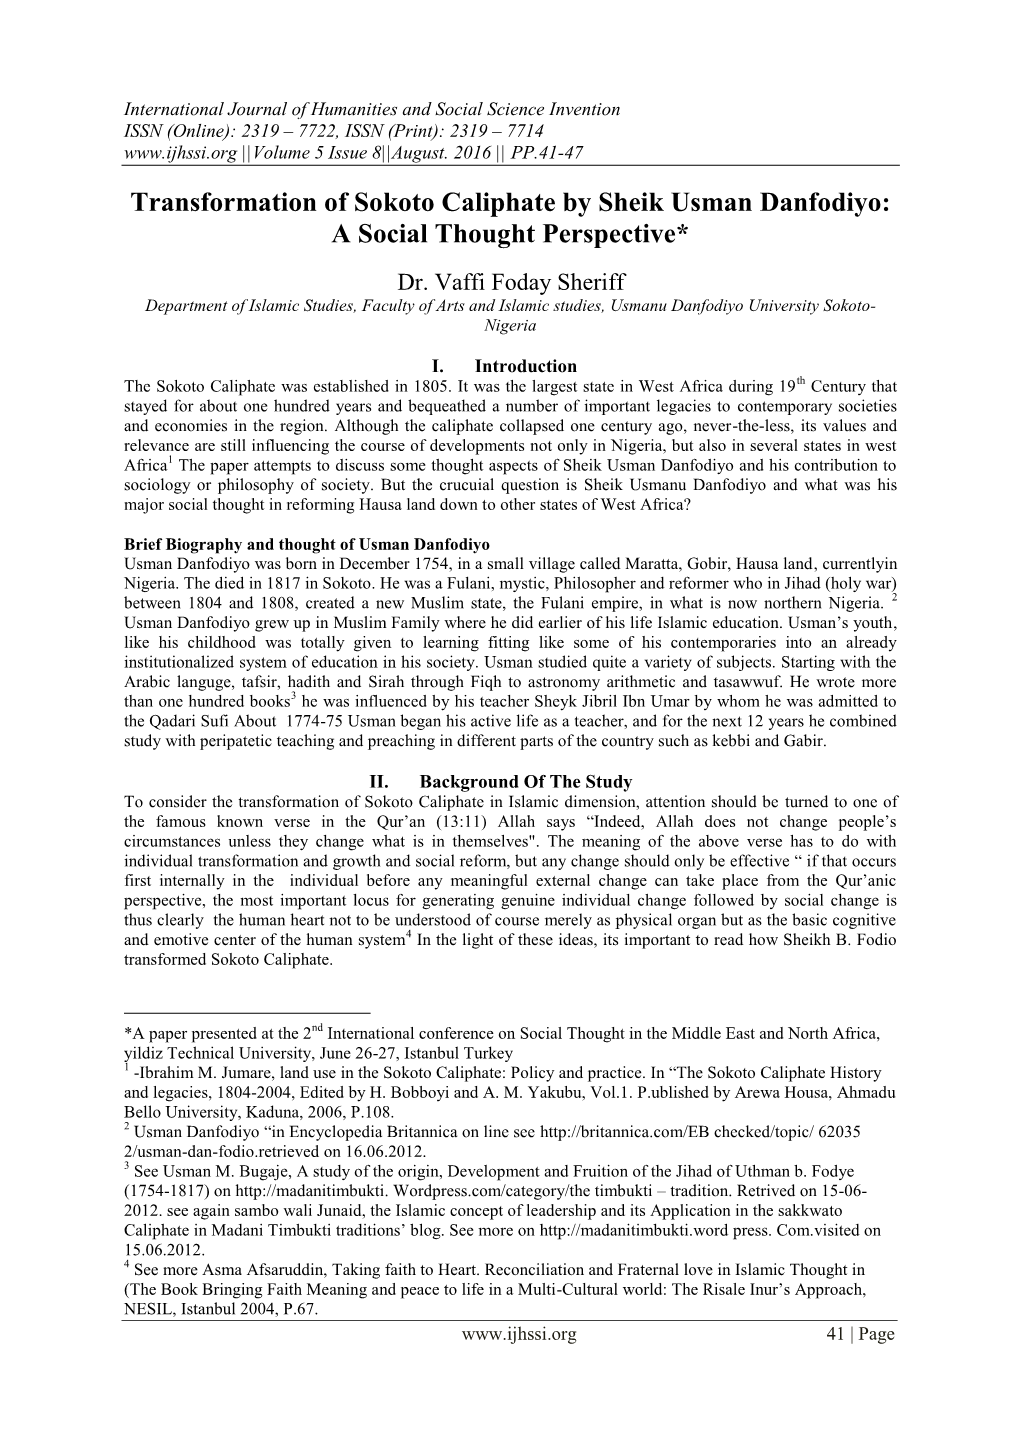 Transformation of Sokoto Caliphate by Sheik Usman Danfodiyo: a Social Thought Perspective*